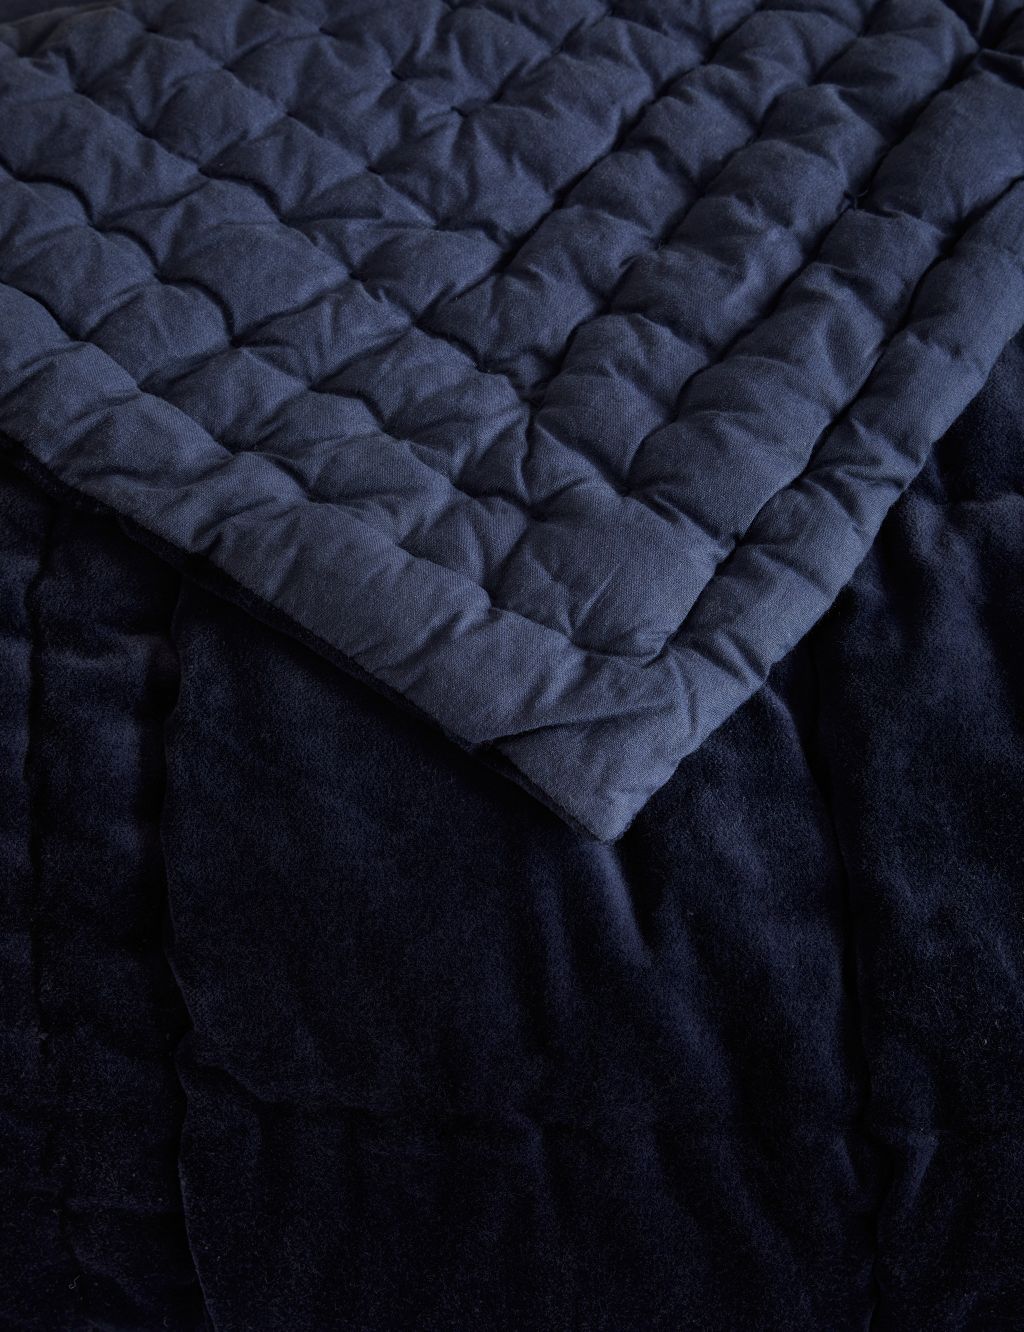 Velvet Quilted Bedspread 1 of 3